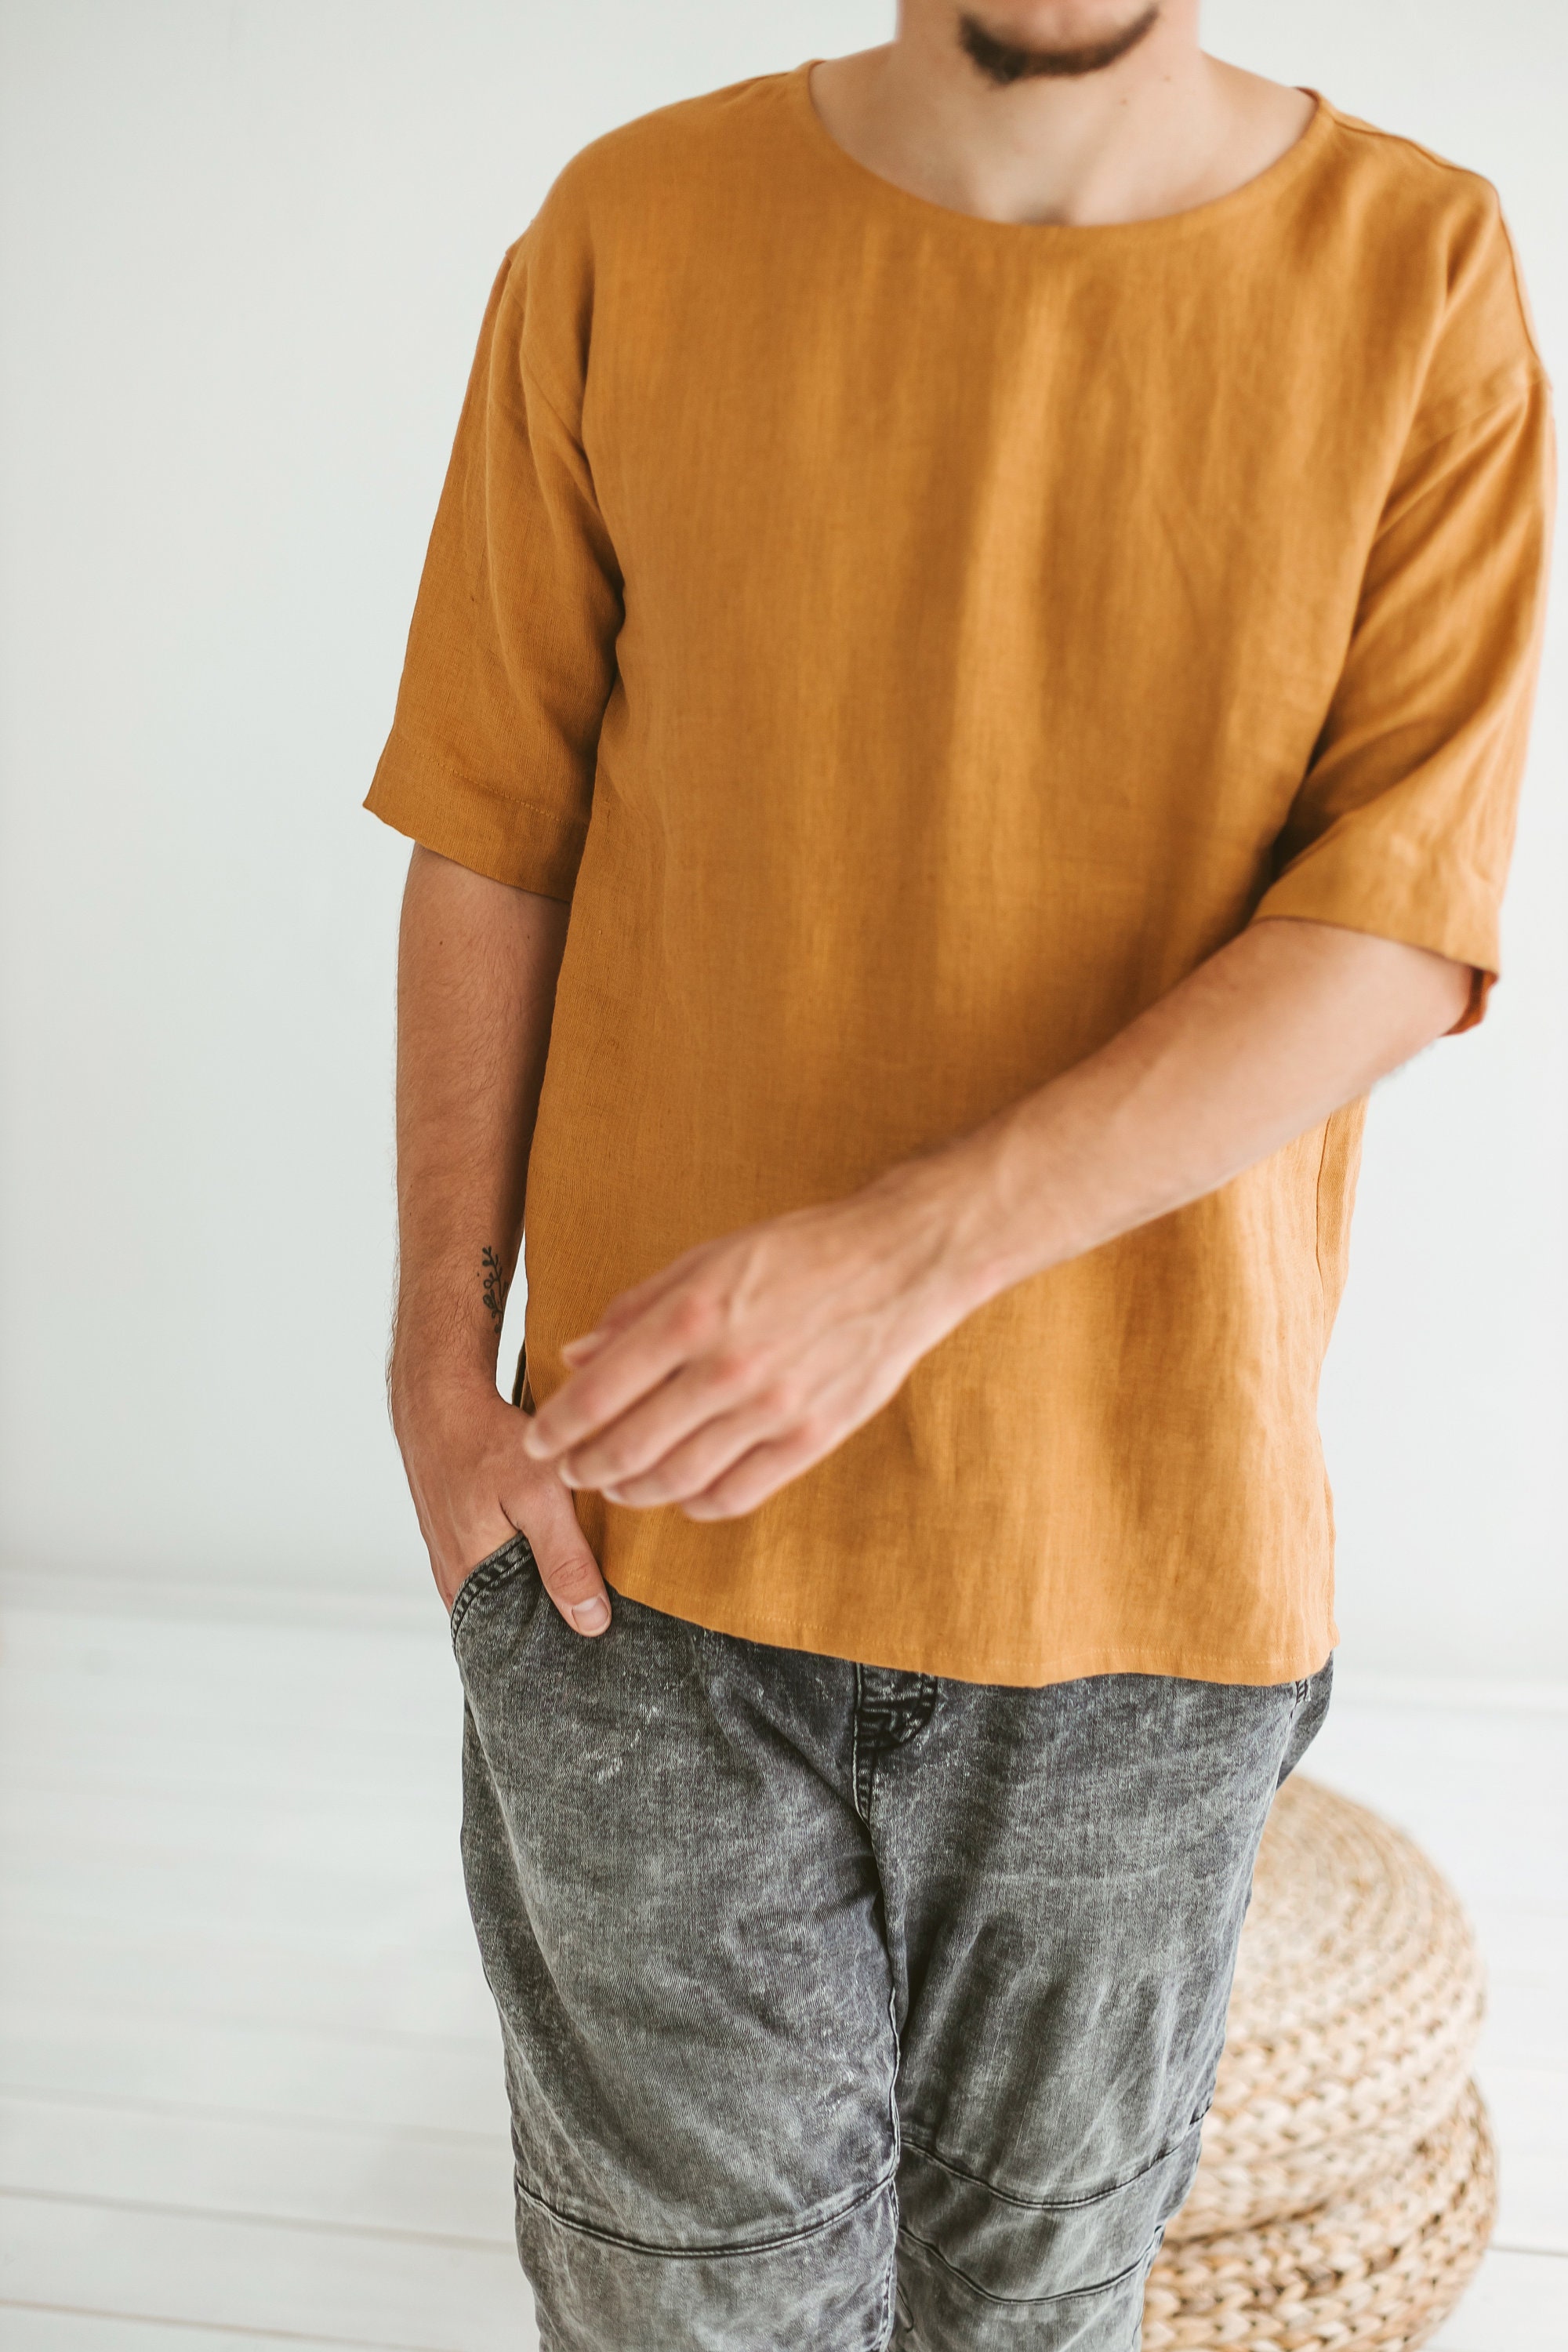 Men Tunic Shirt Mustard Linen Asymmetric Shirt Men Loose Fit | Etsy